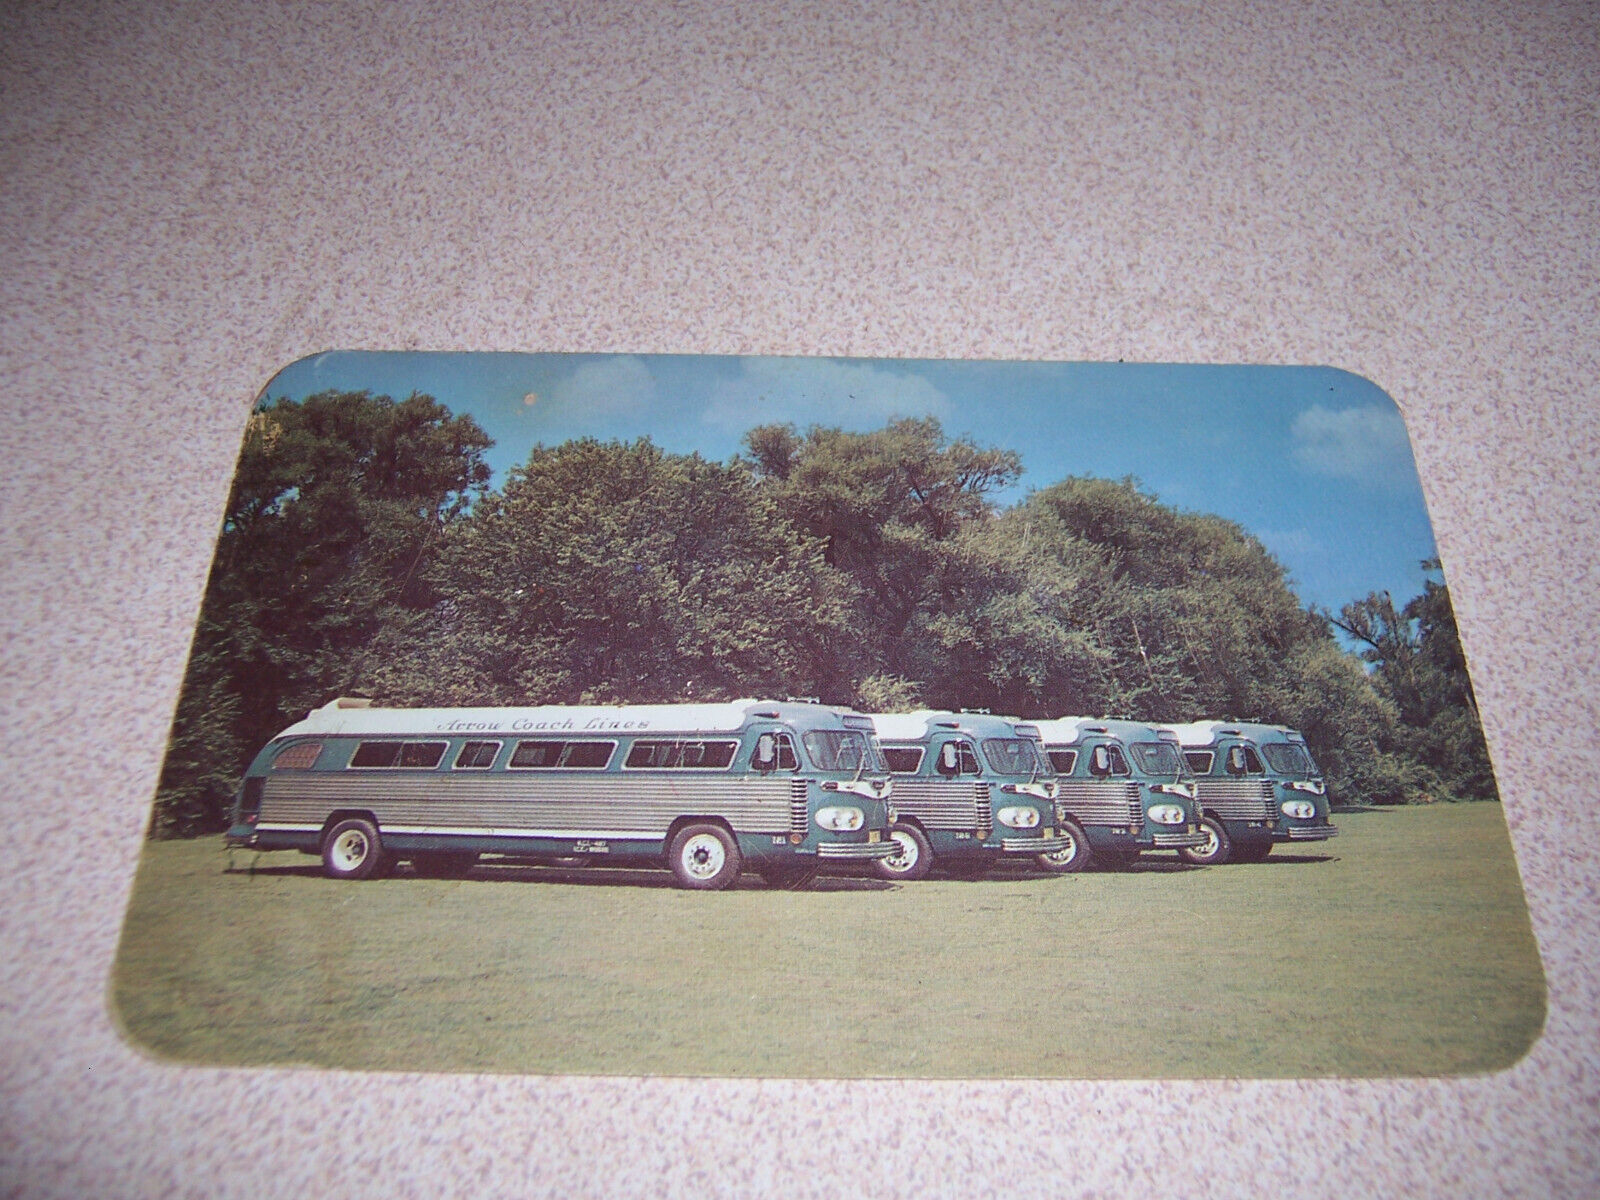 1950s ARROW COACH LINES FLEET, BROWNWOOD TEXAS, FLXIBLE BUS COMPANY VTG POSTCARD